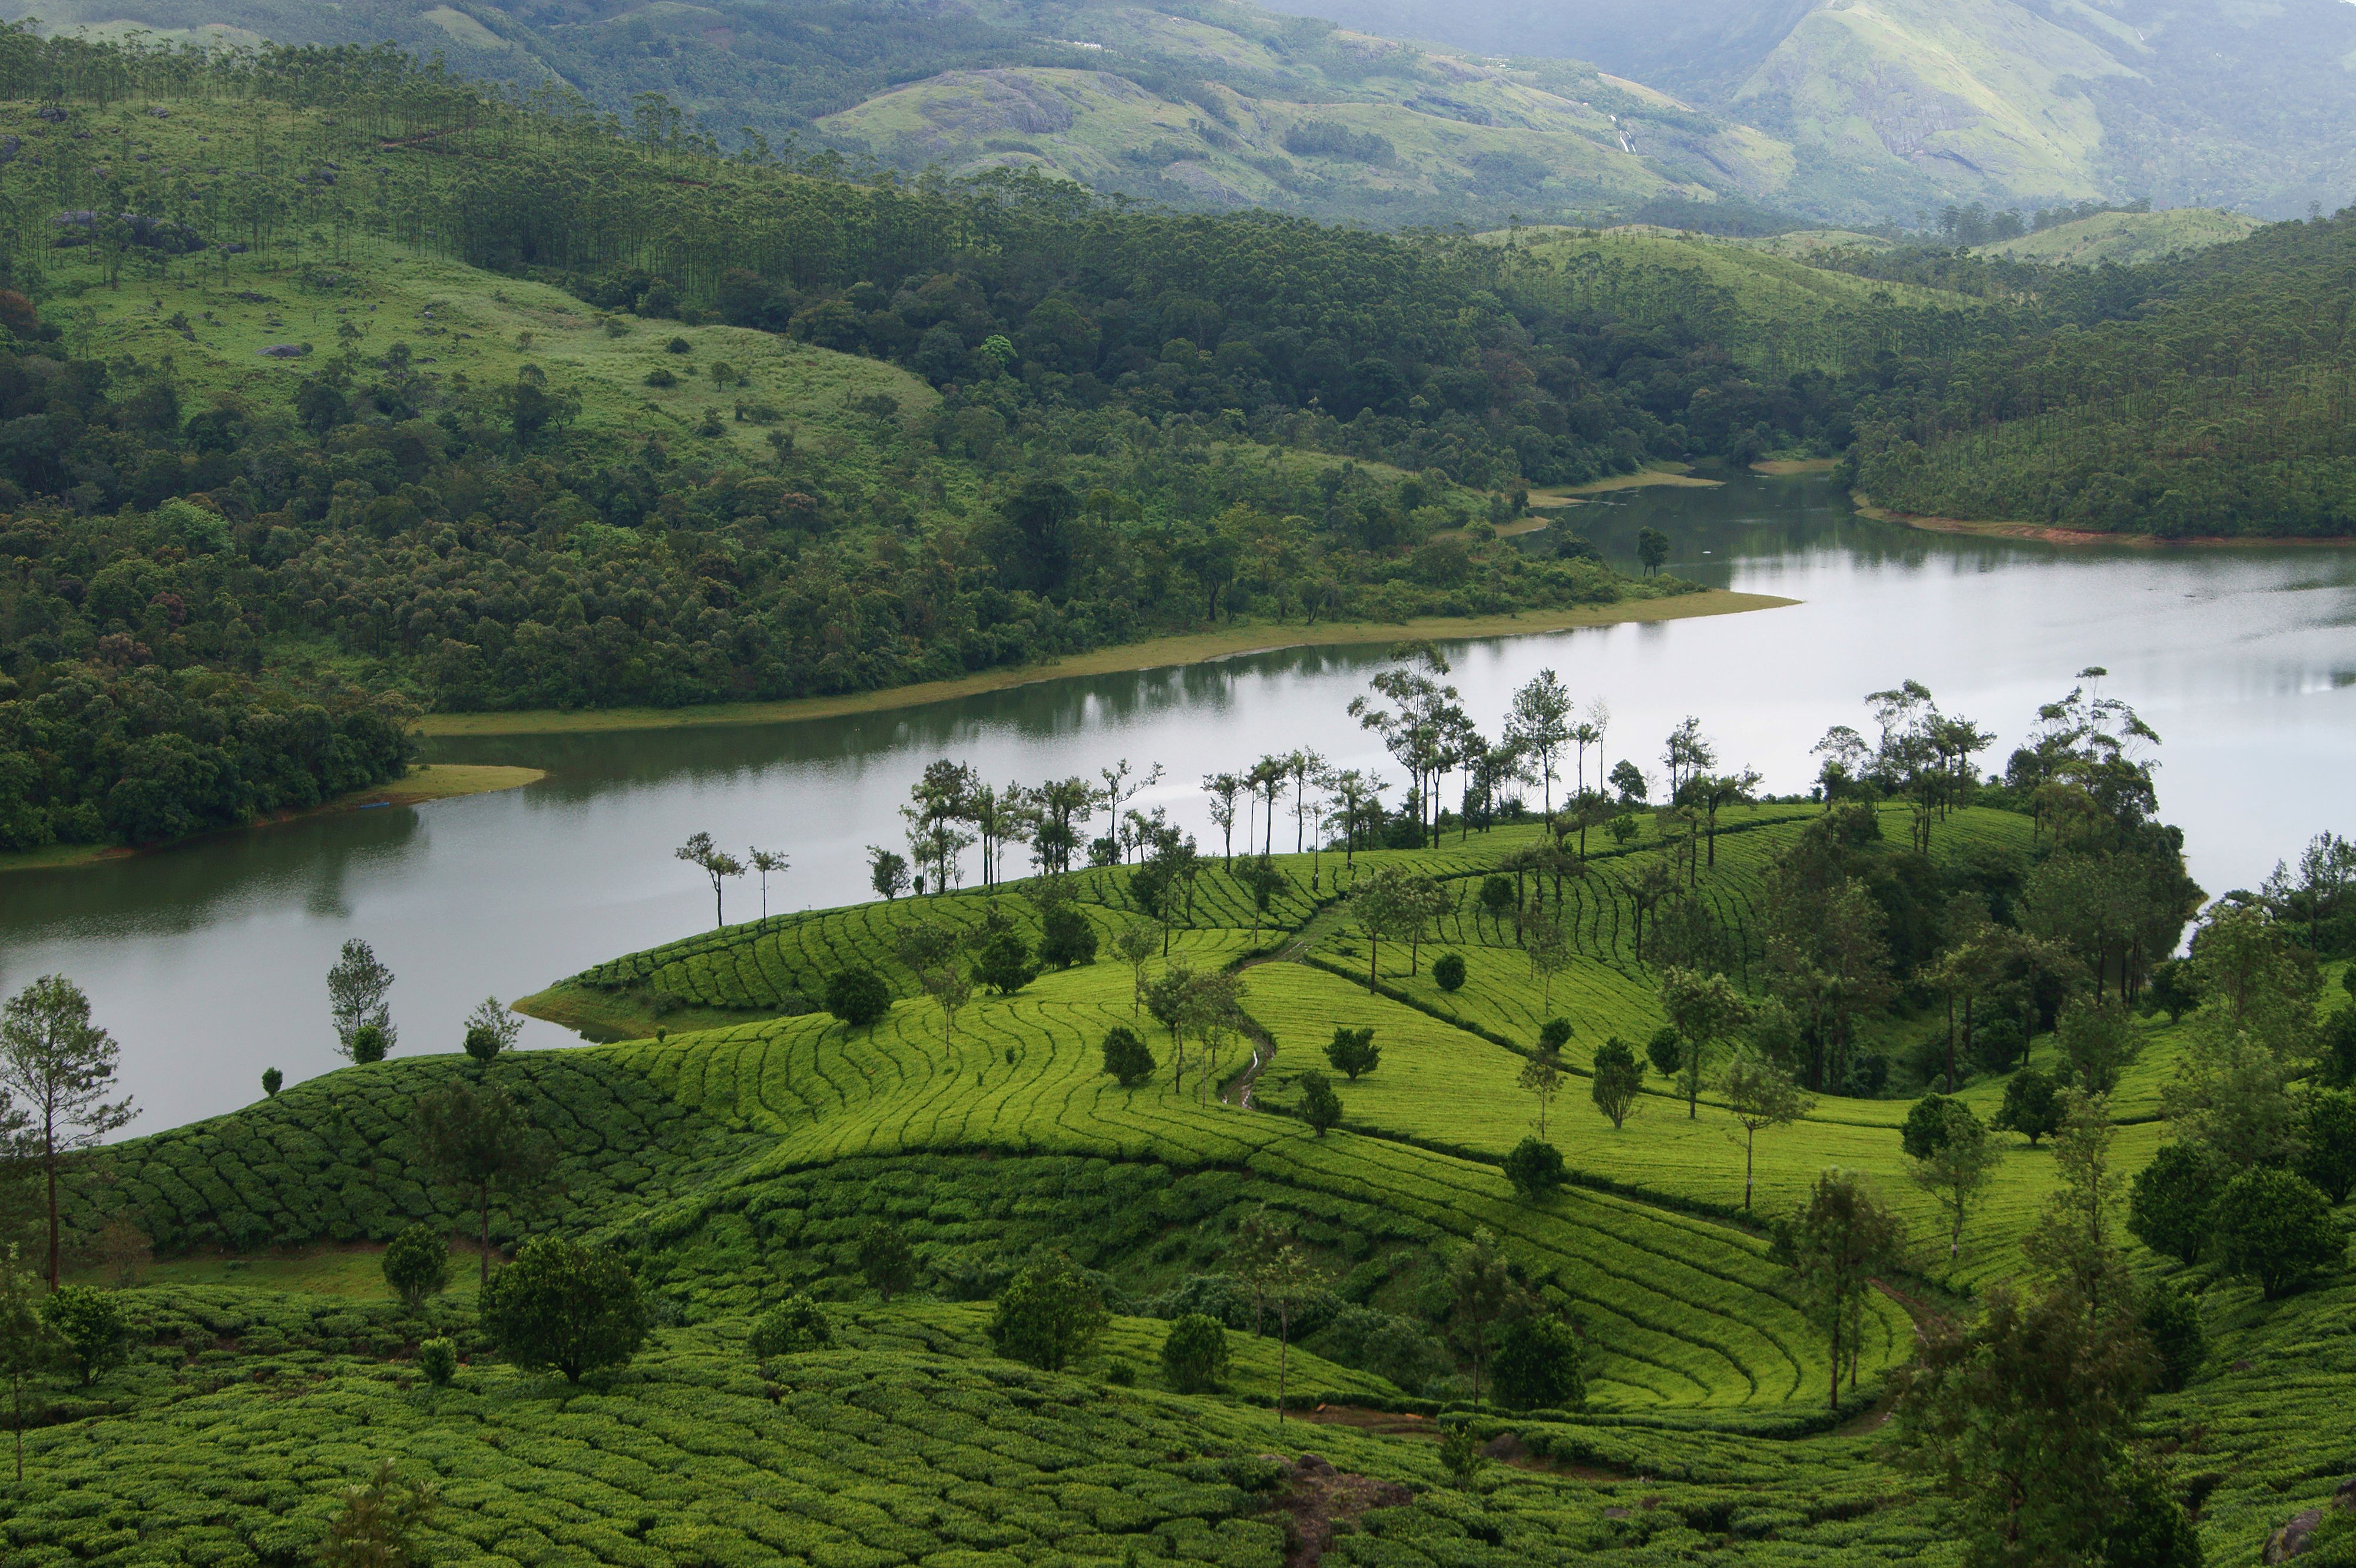 Hills and Tea plantations of Munnar popular hill station in Kerala